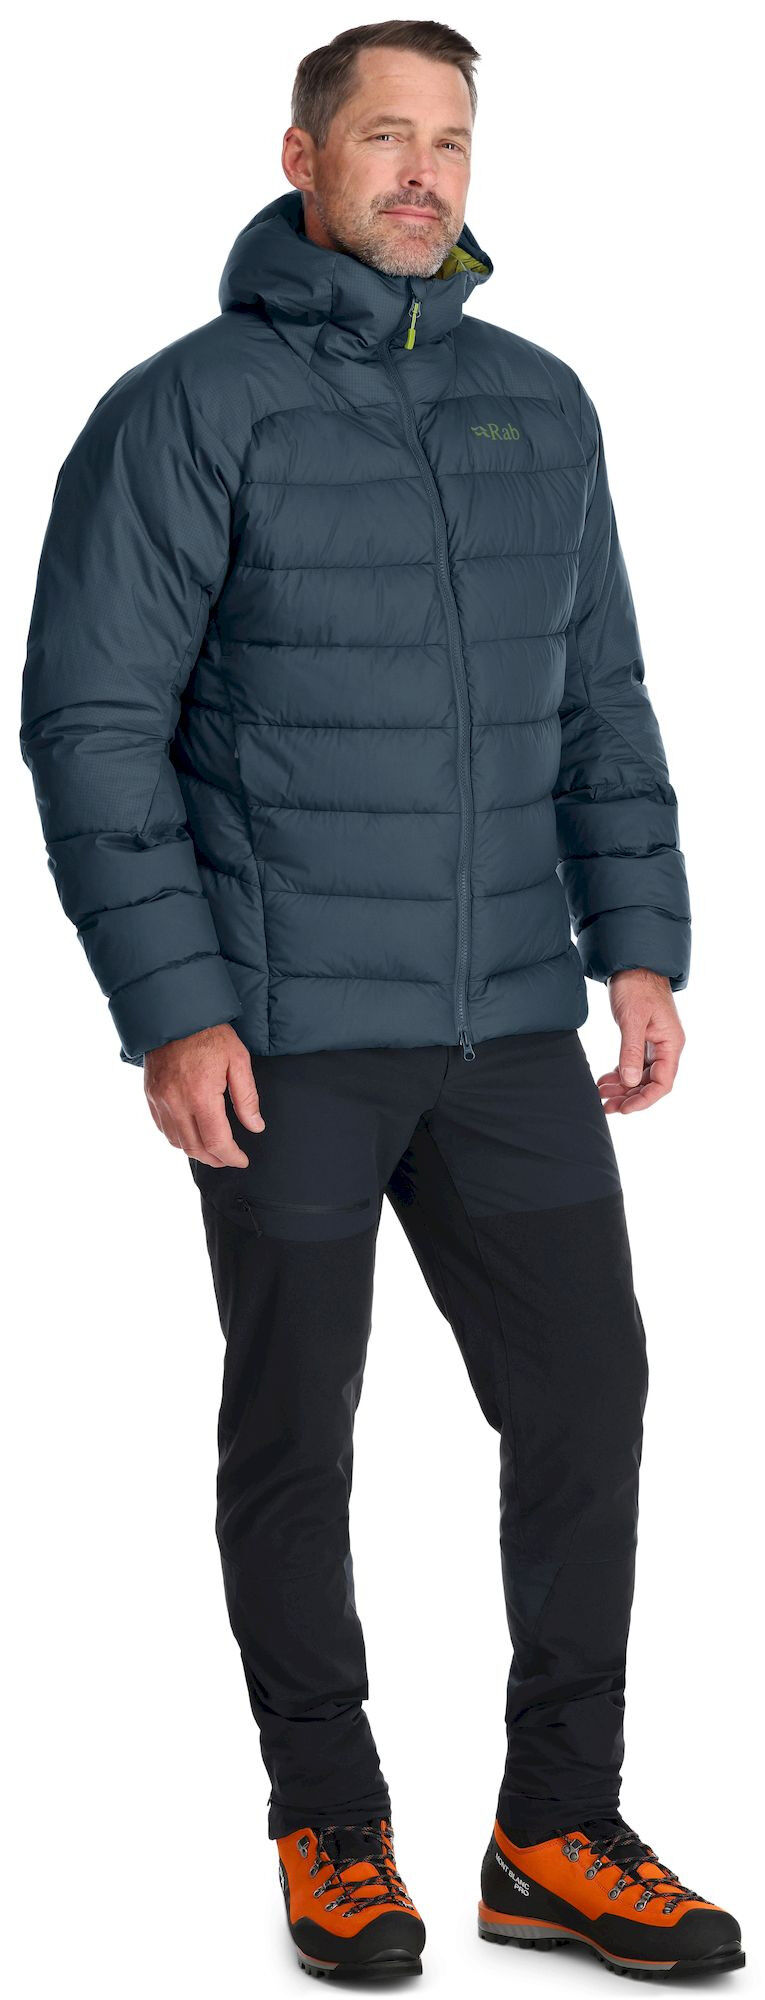 Rab Infinity Alpine Jacket - Down jacket - Men's